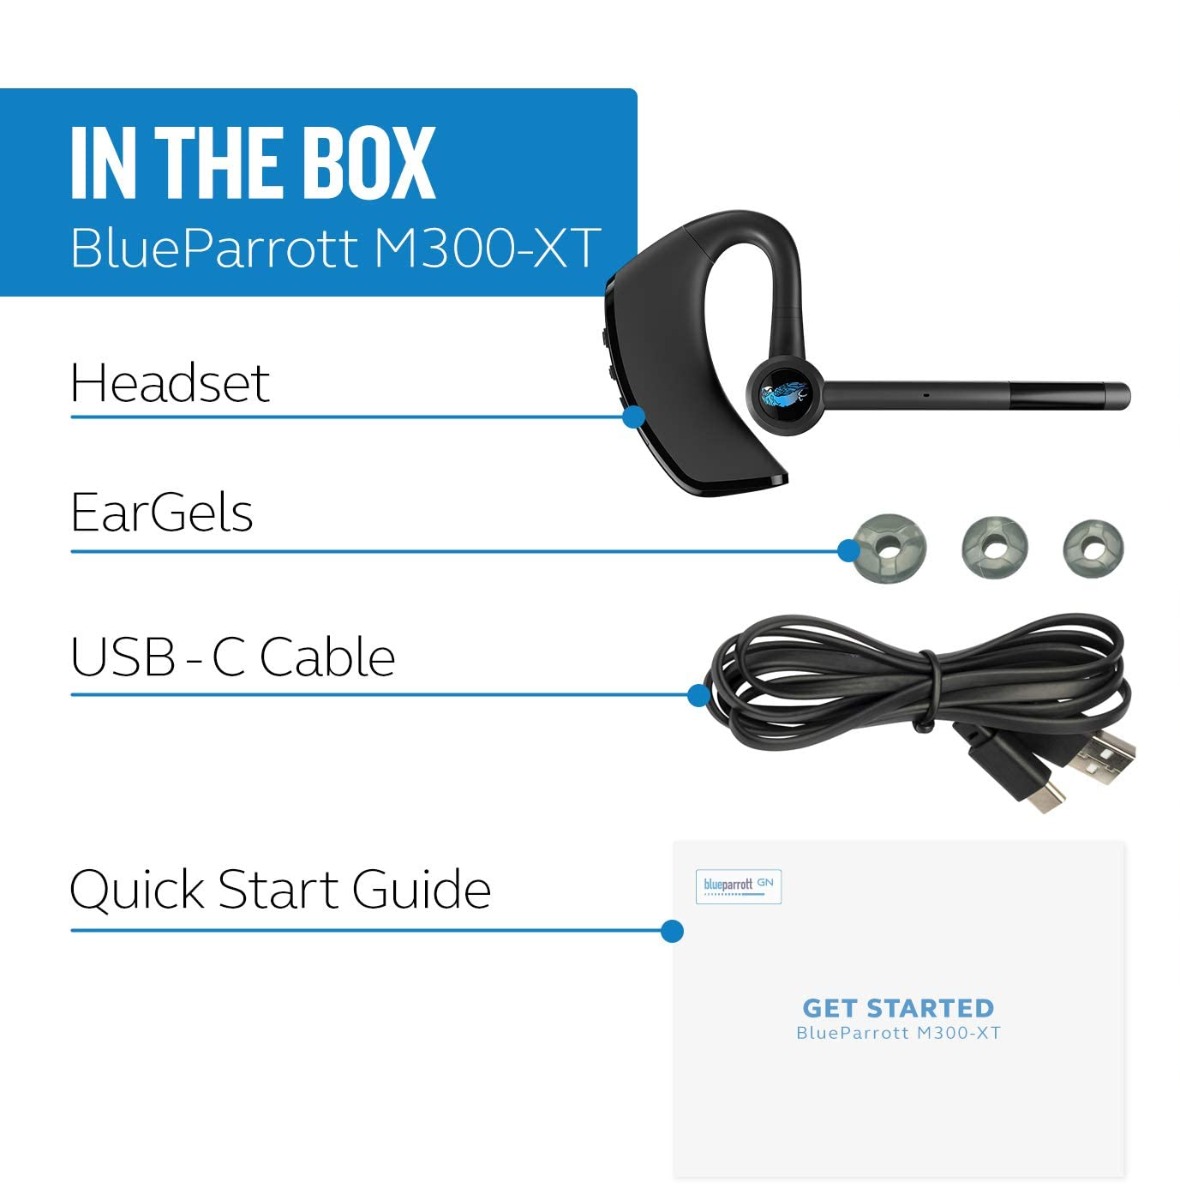 blueparrot m300-xt.หูฟังบลูทูธ,หูฟังคุยโทรศัพท์.mono headset,ไมค์ชัด,ios,android,คุยชัด,ใส่สบาย,แบตอึด